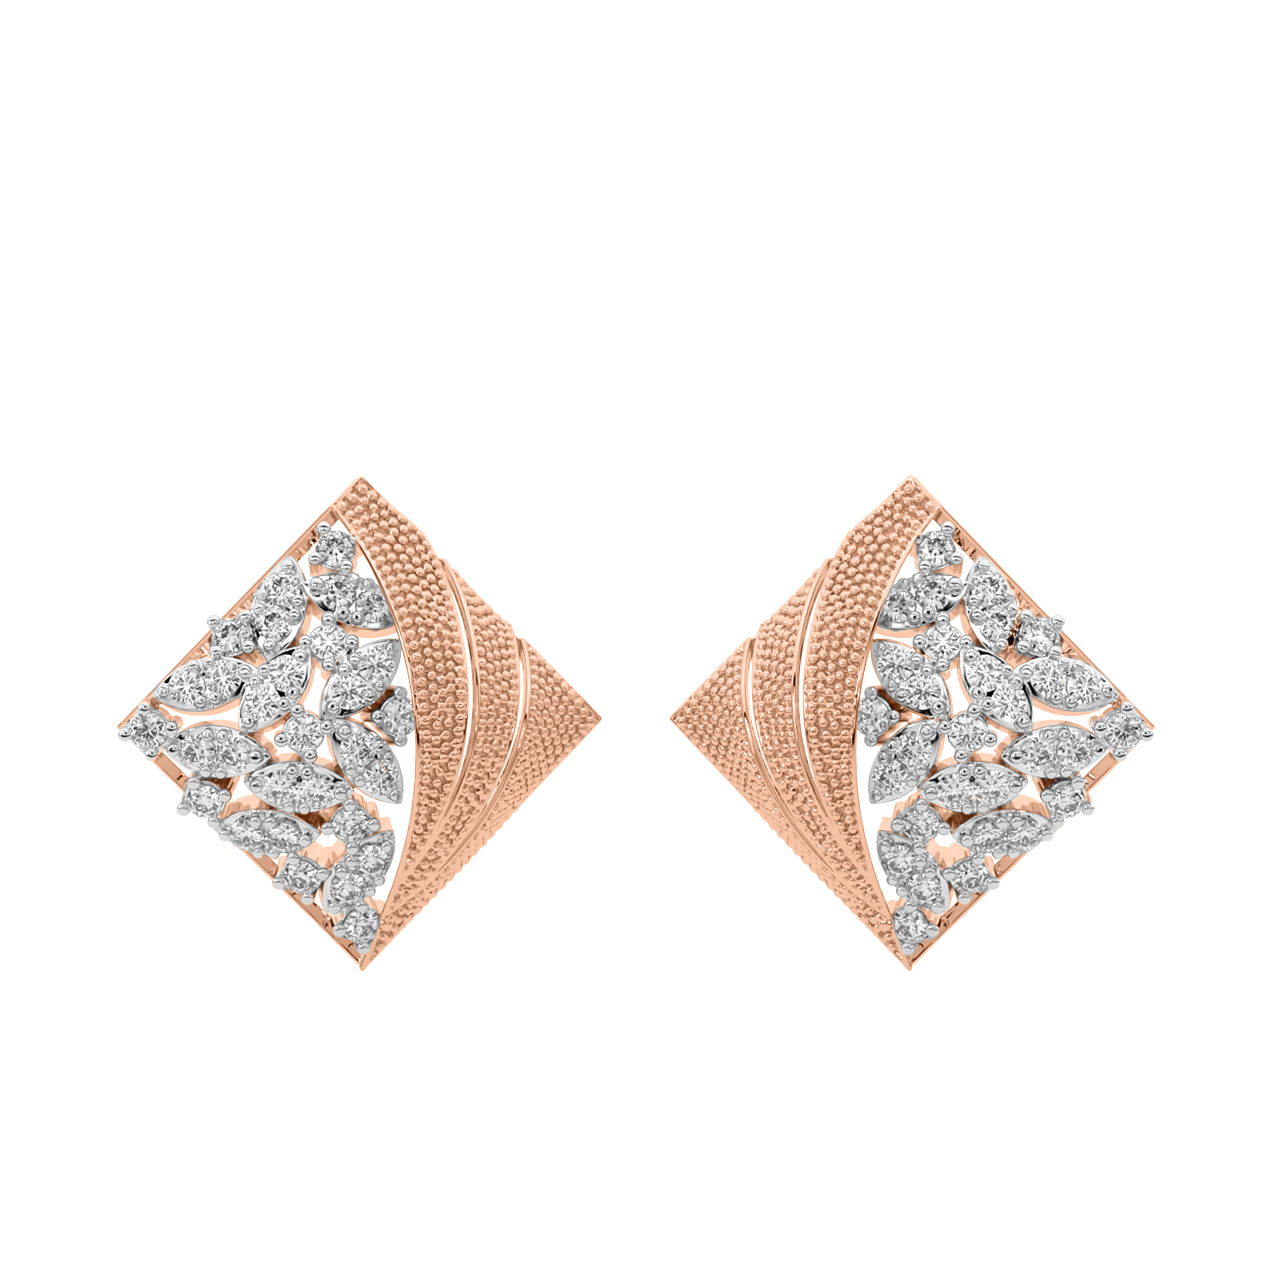 All Square Diamond Earrings